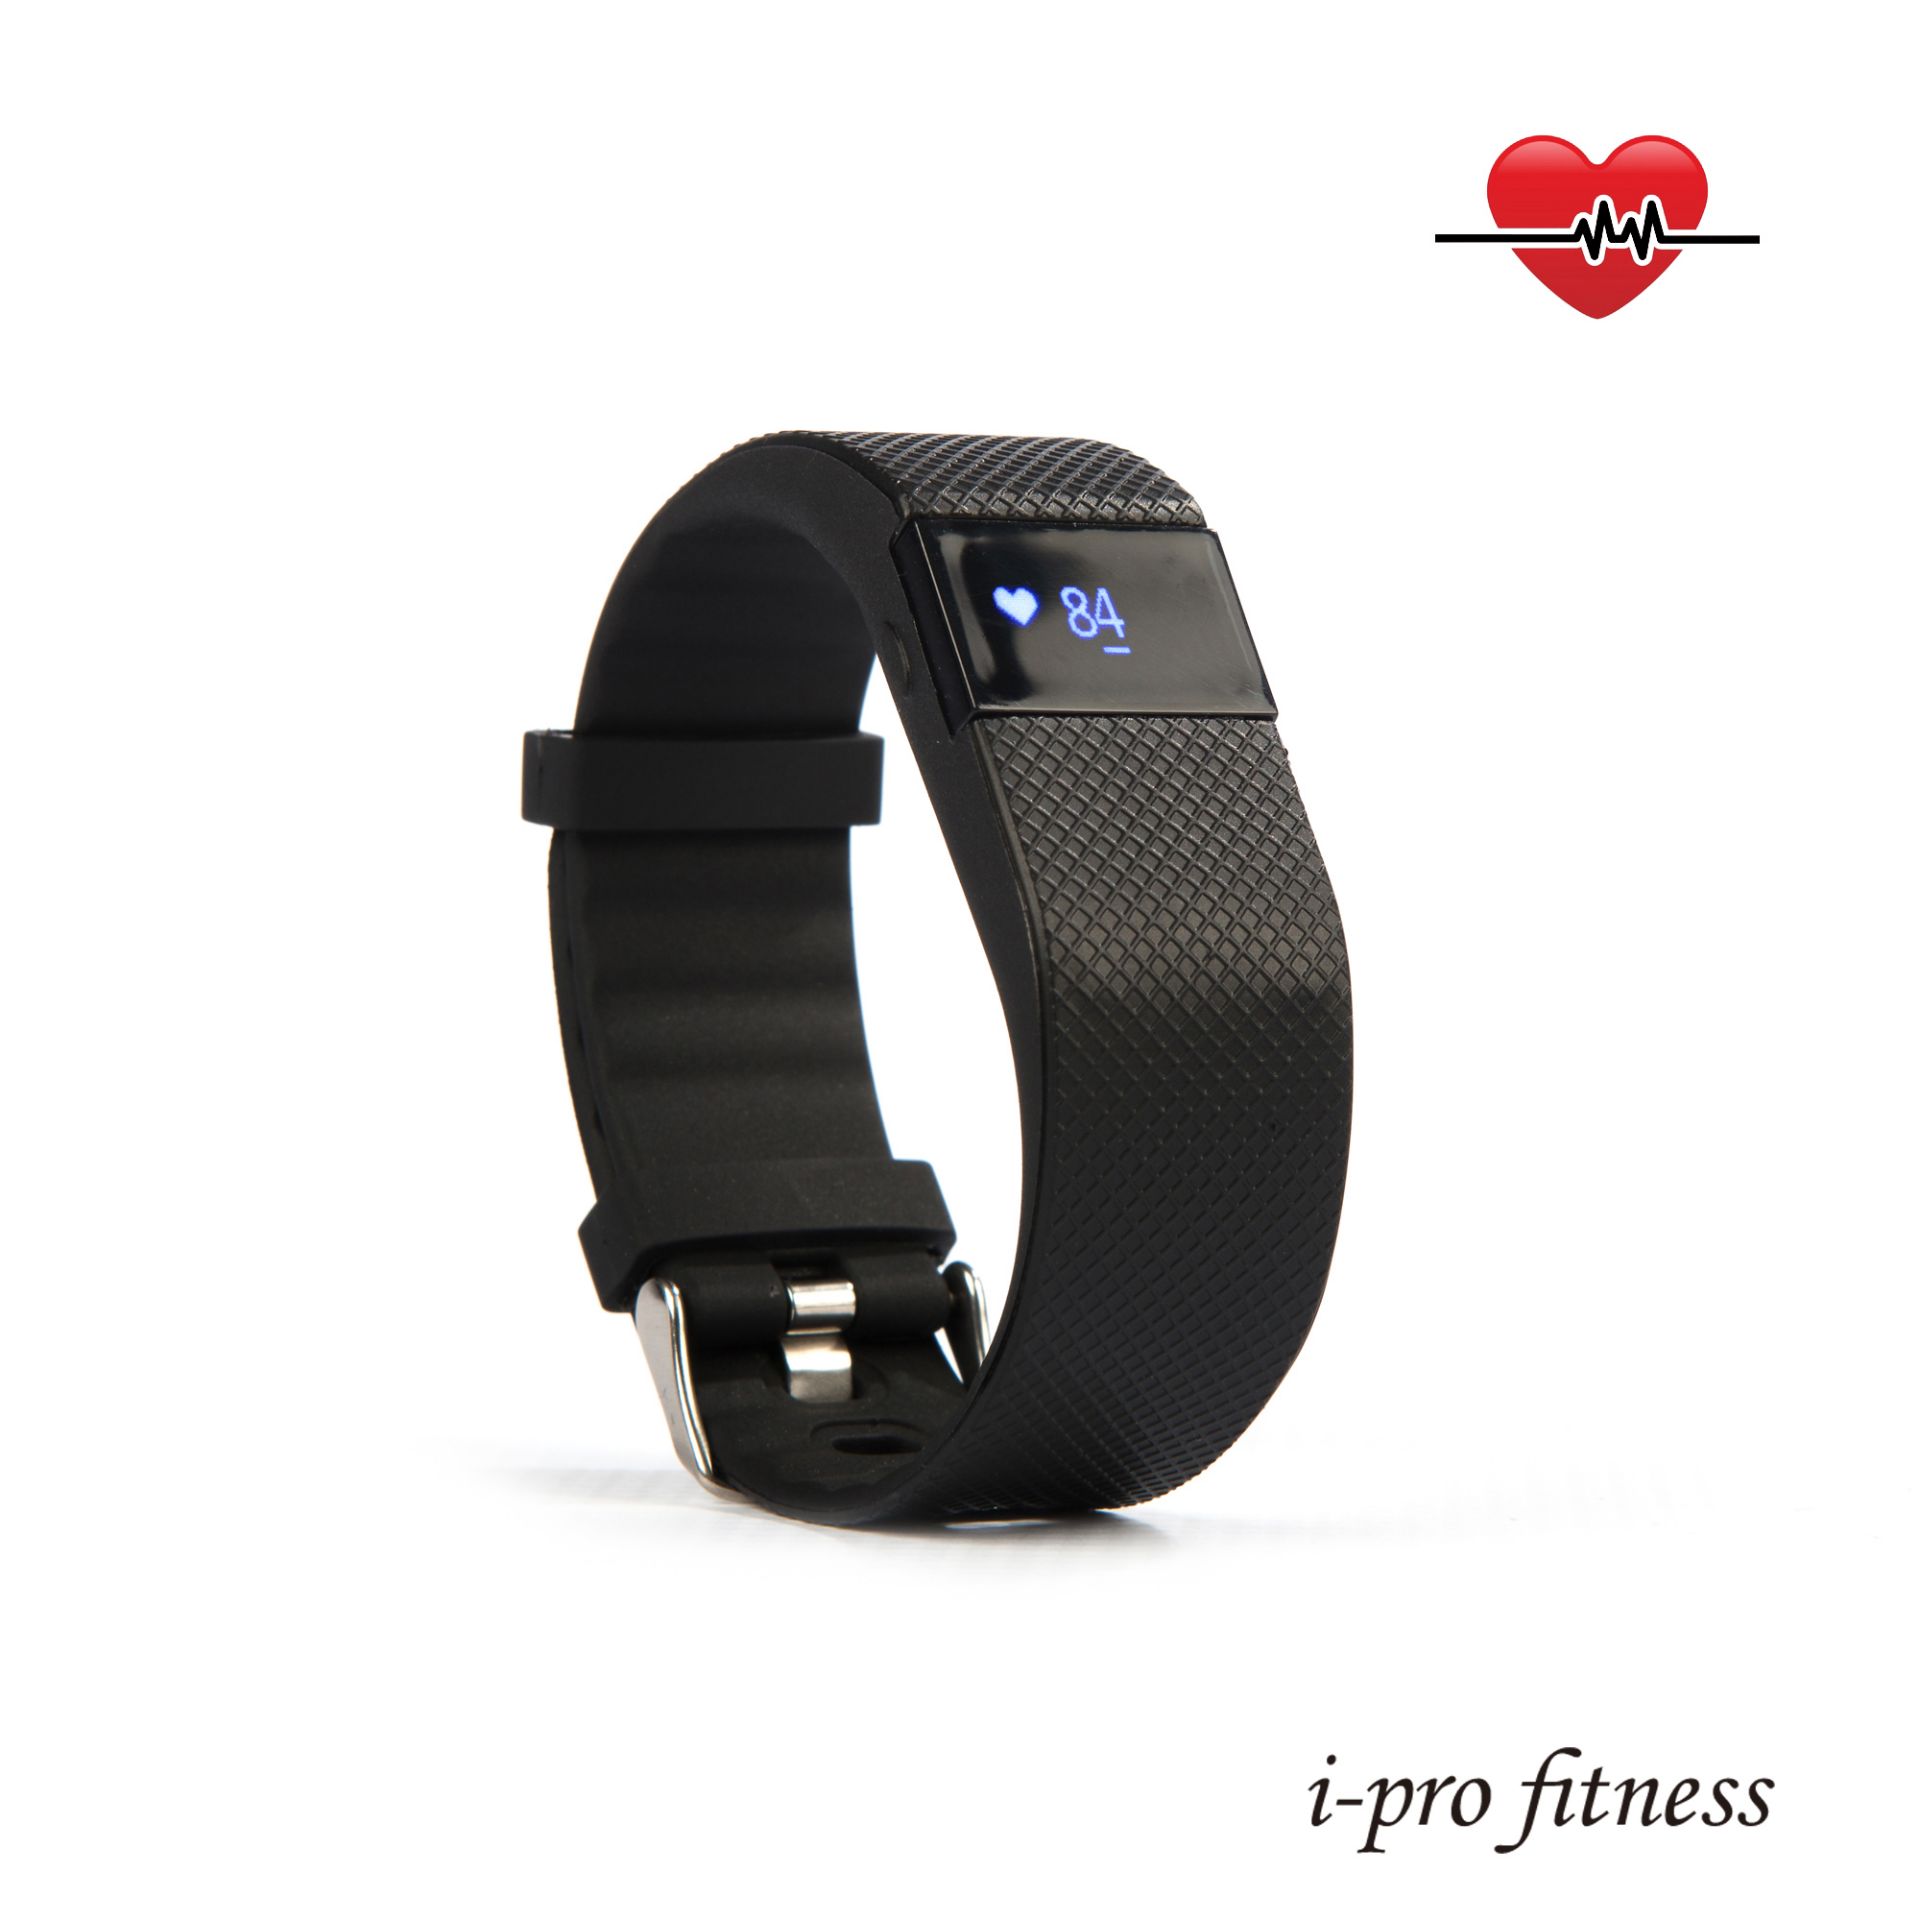 Fitness Tracker i-pro fitness, Bluetooth 4.0 Sports Smart Bracelet, Heart Rate Monitor & - Image 4 of 8